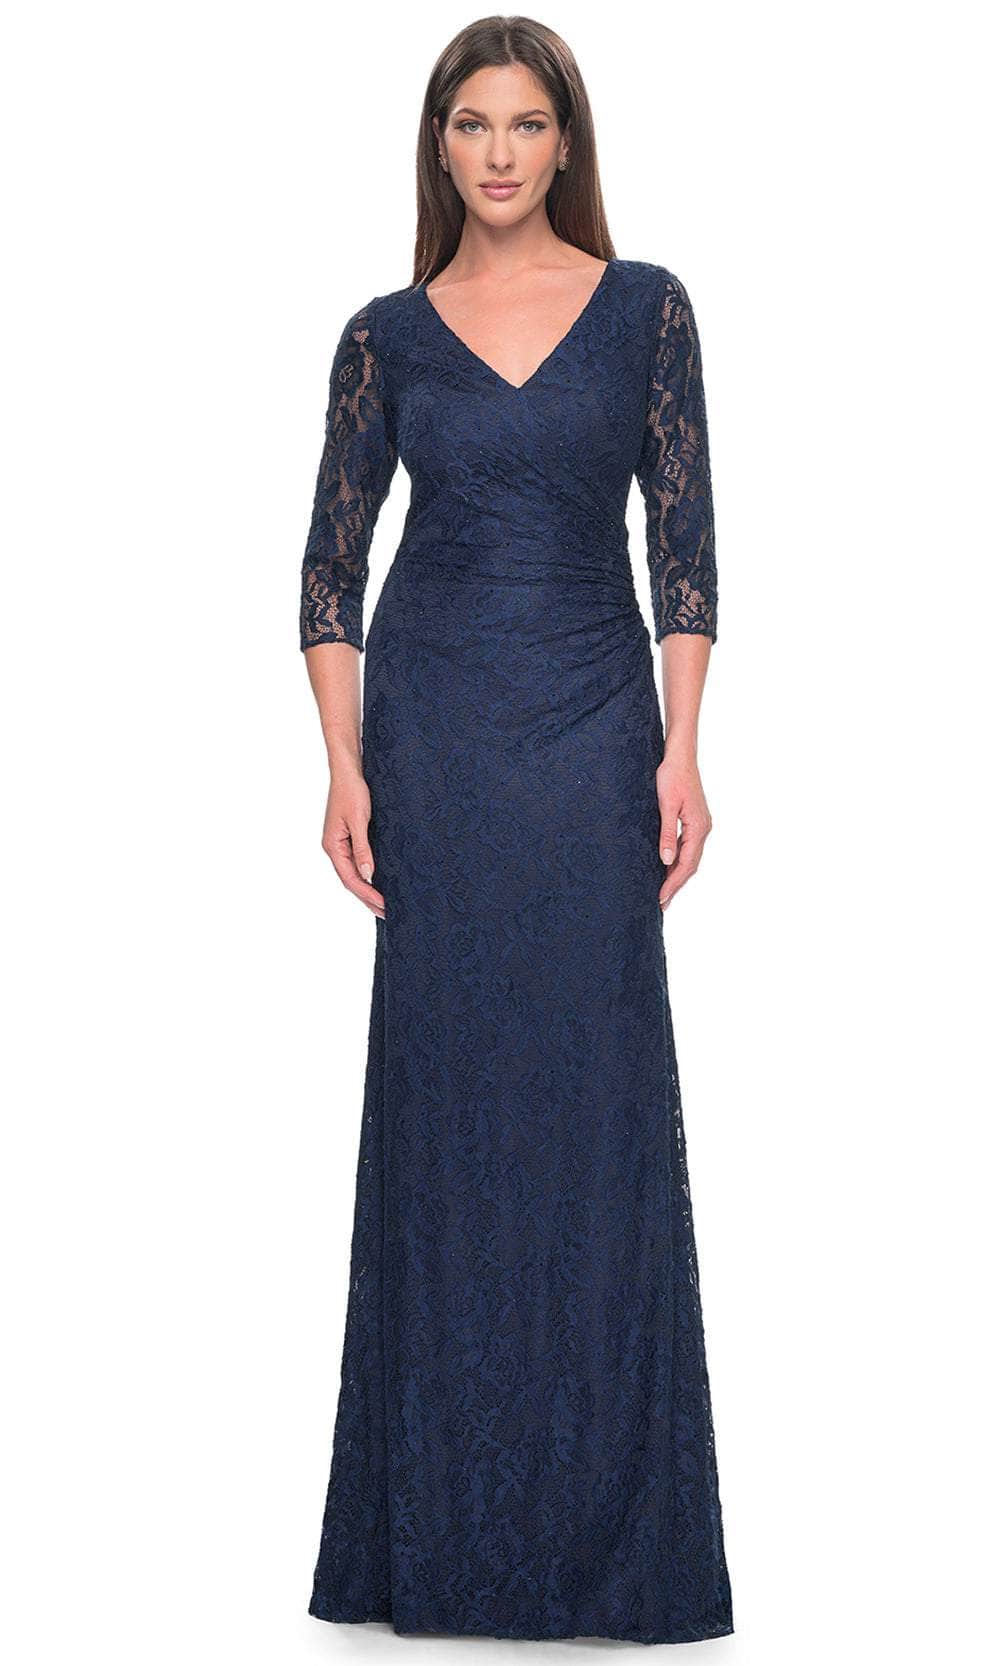 La Femme 30379 - Floral Lace Formal Dress Evening Dresses 4 / Navy